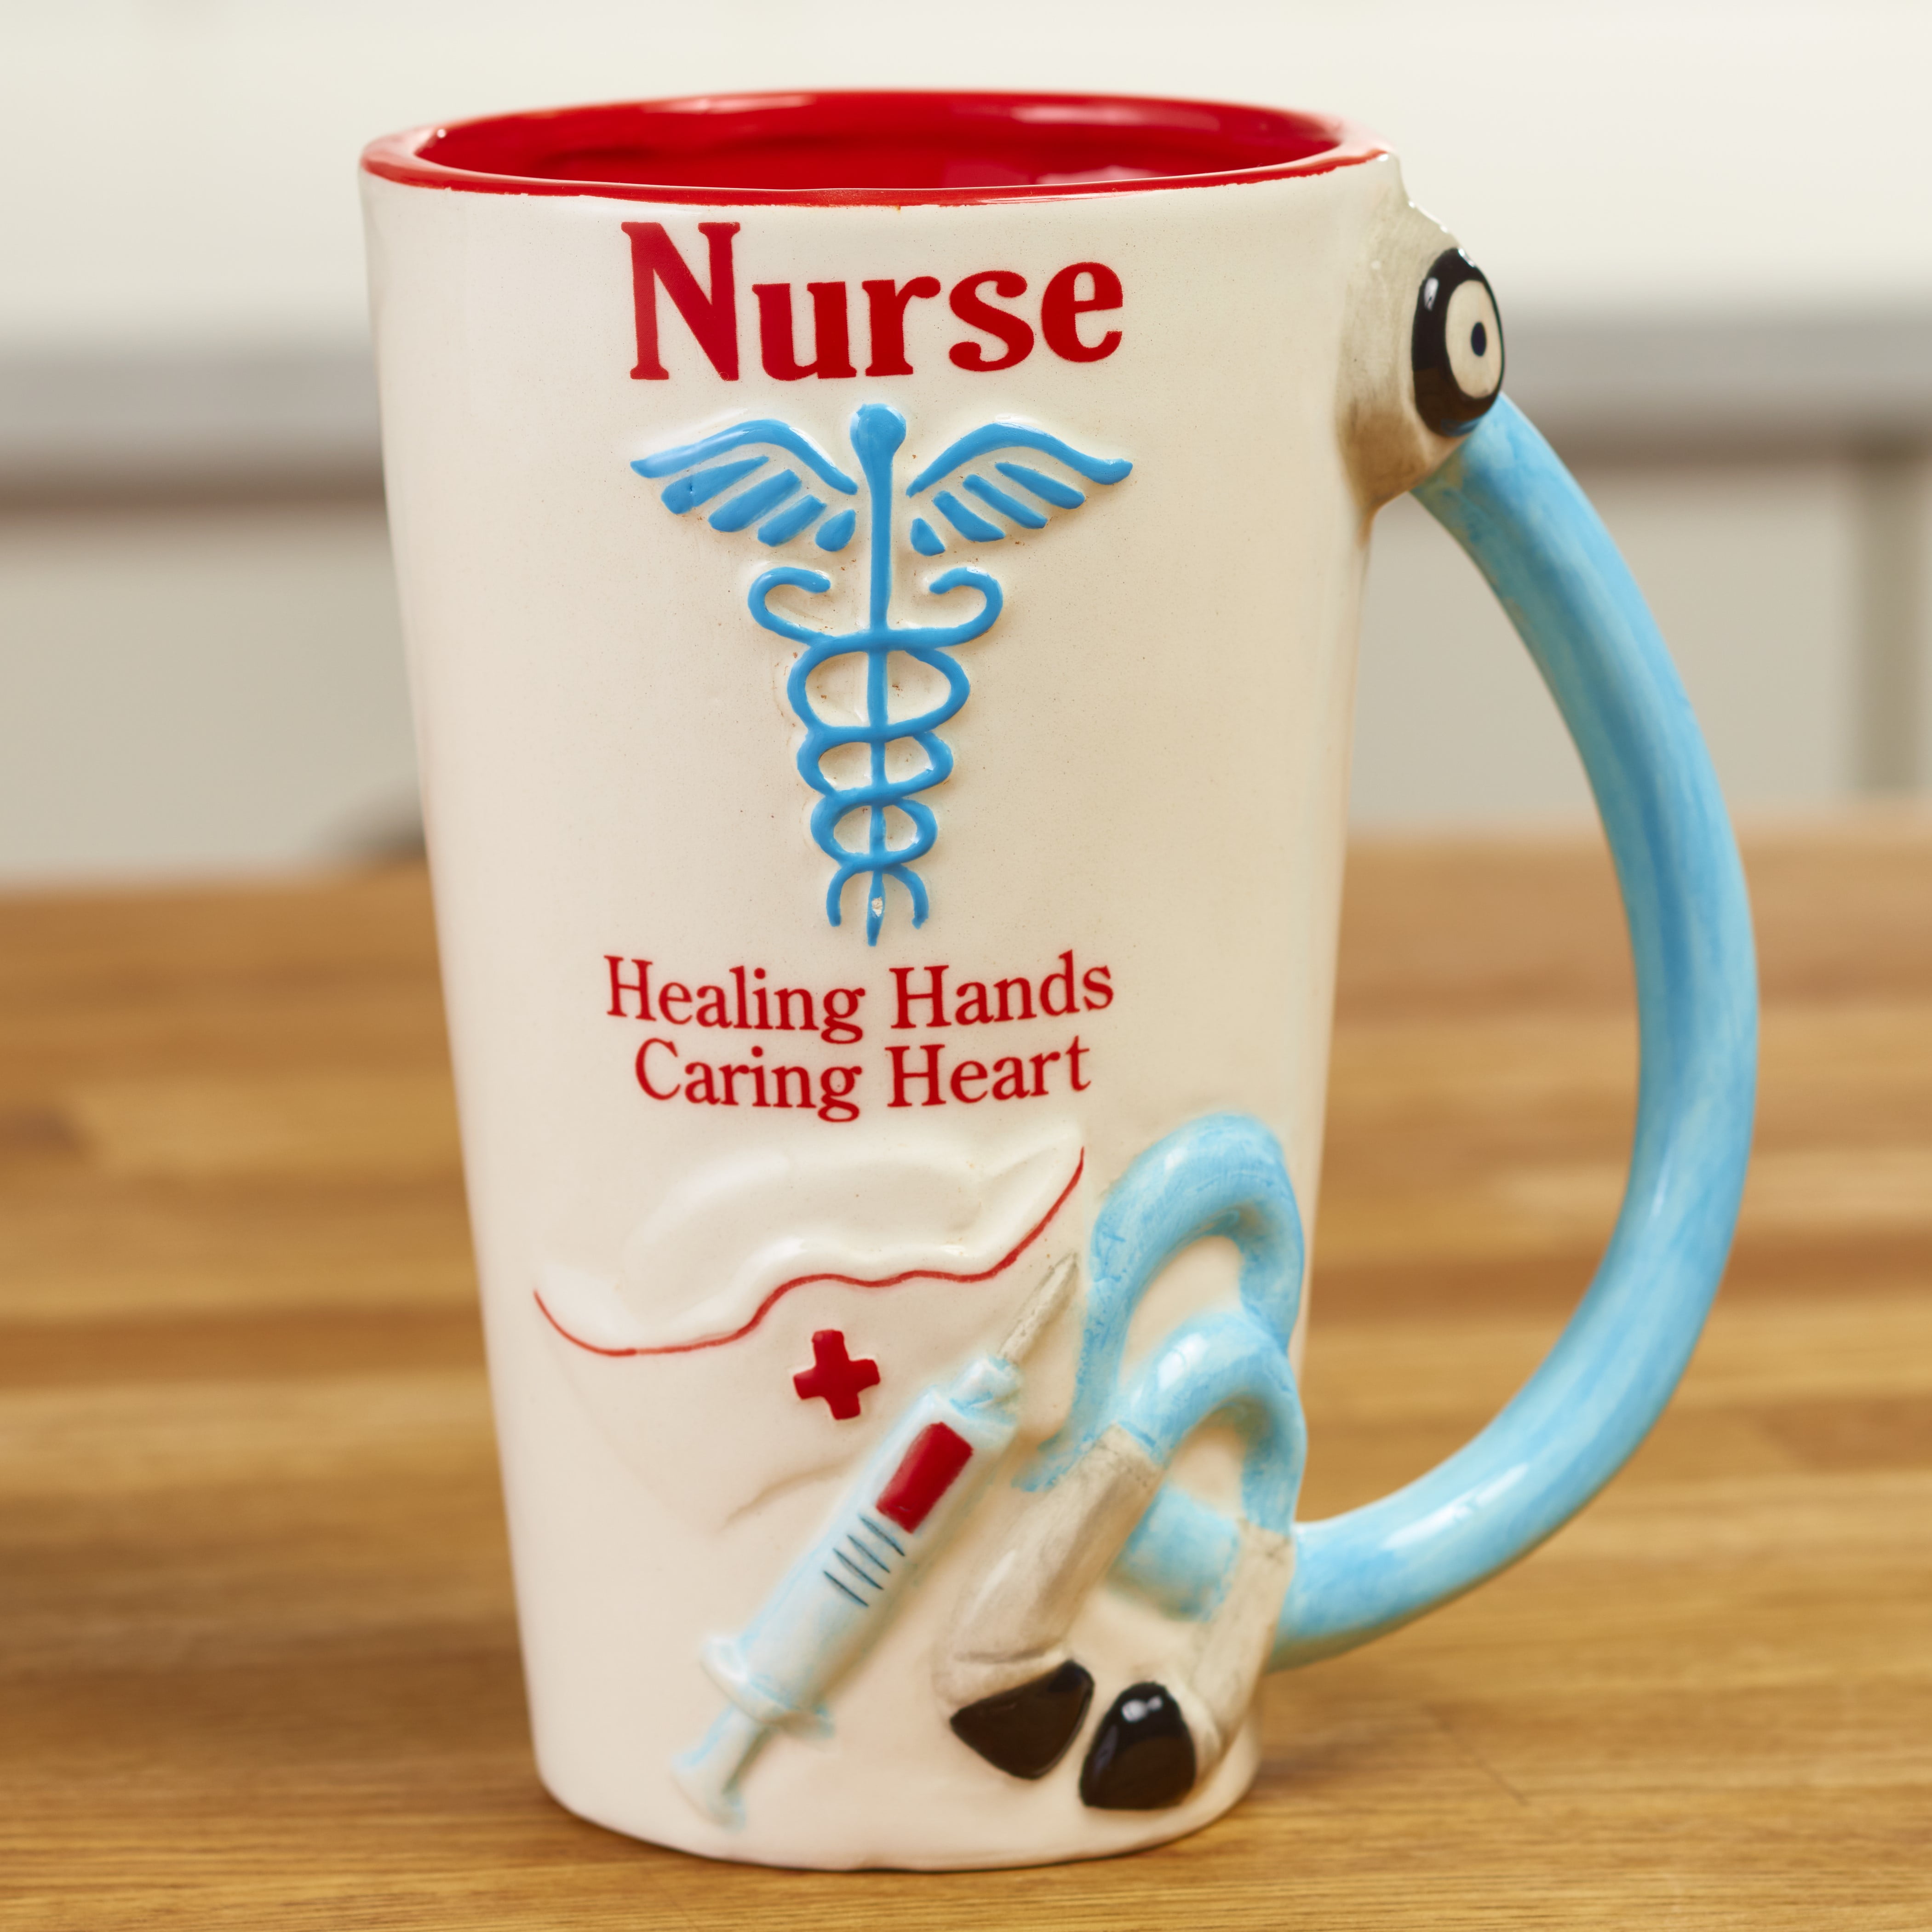 Nurse Equipment Icons Design Ceramic Coffee Mug with Inspirational Quote 